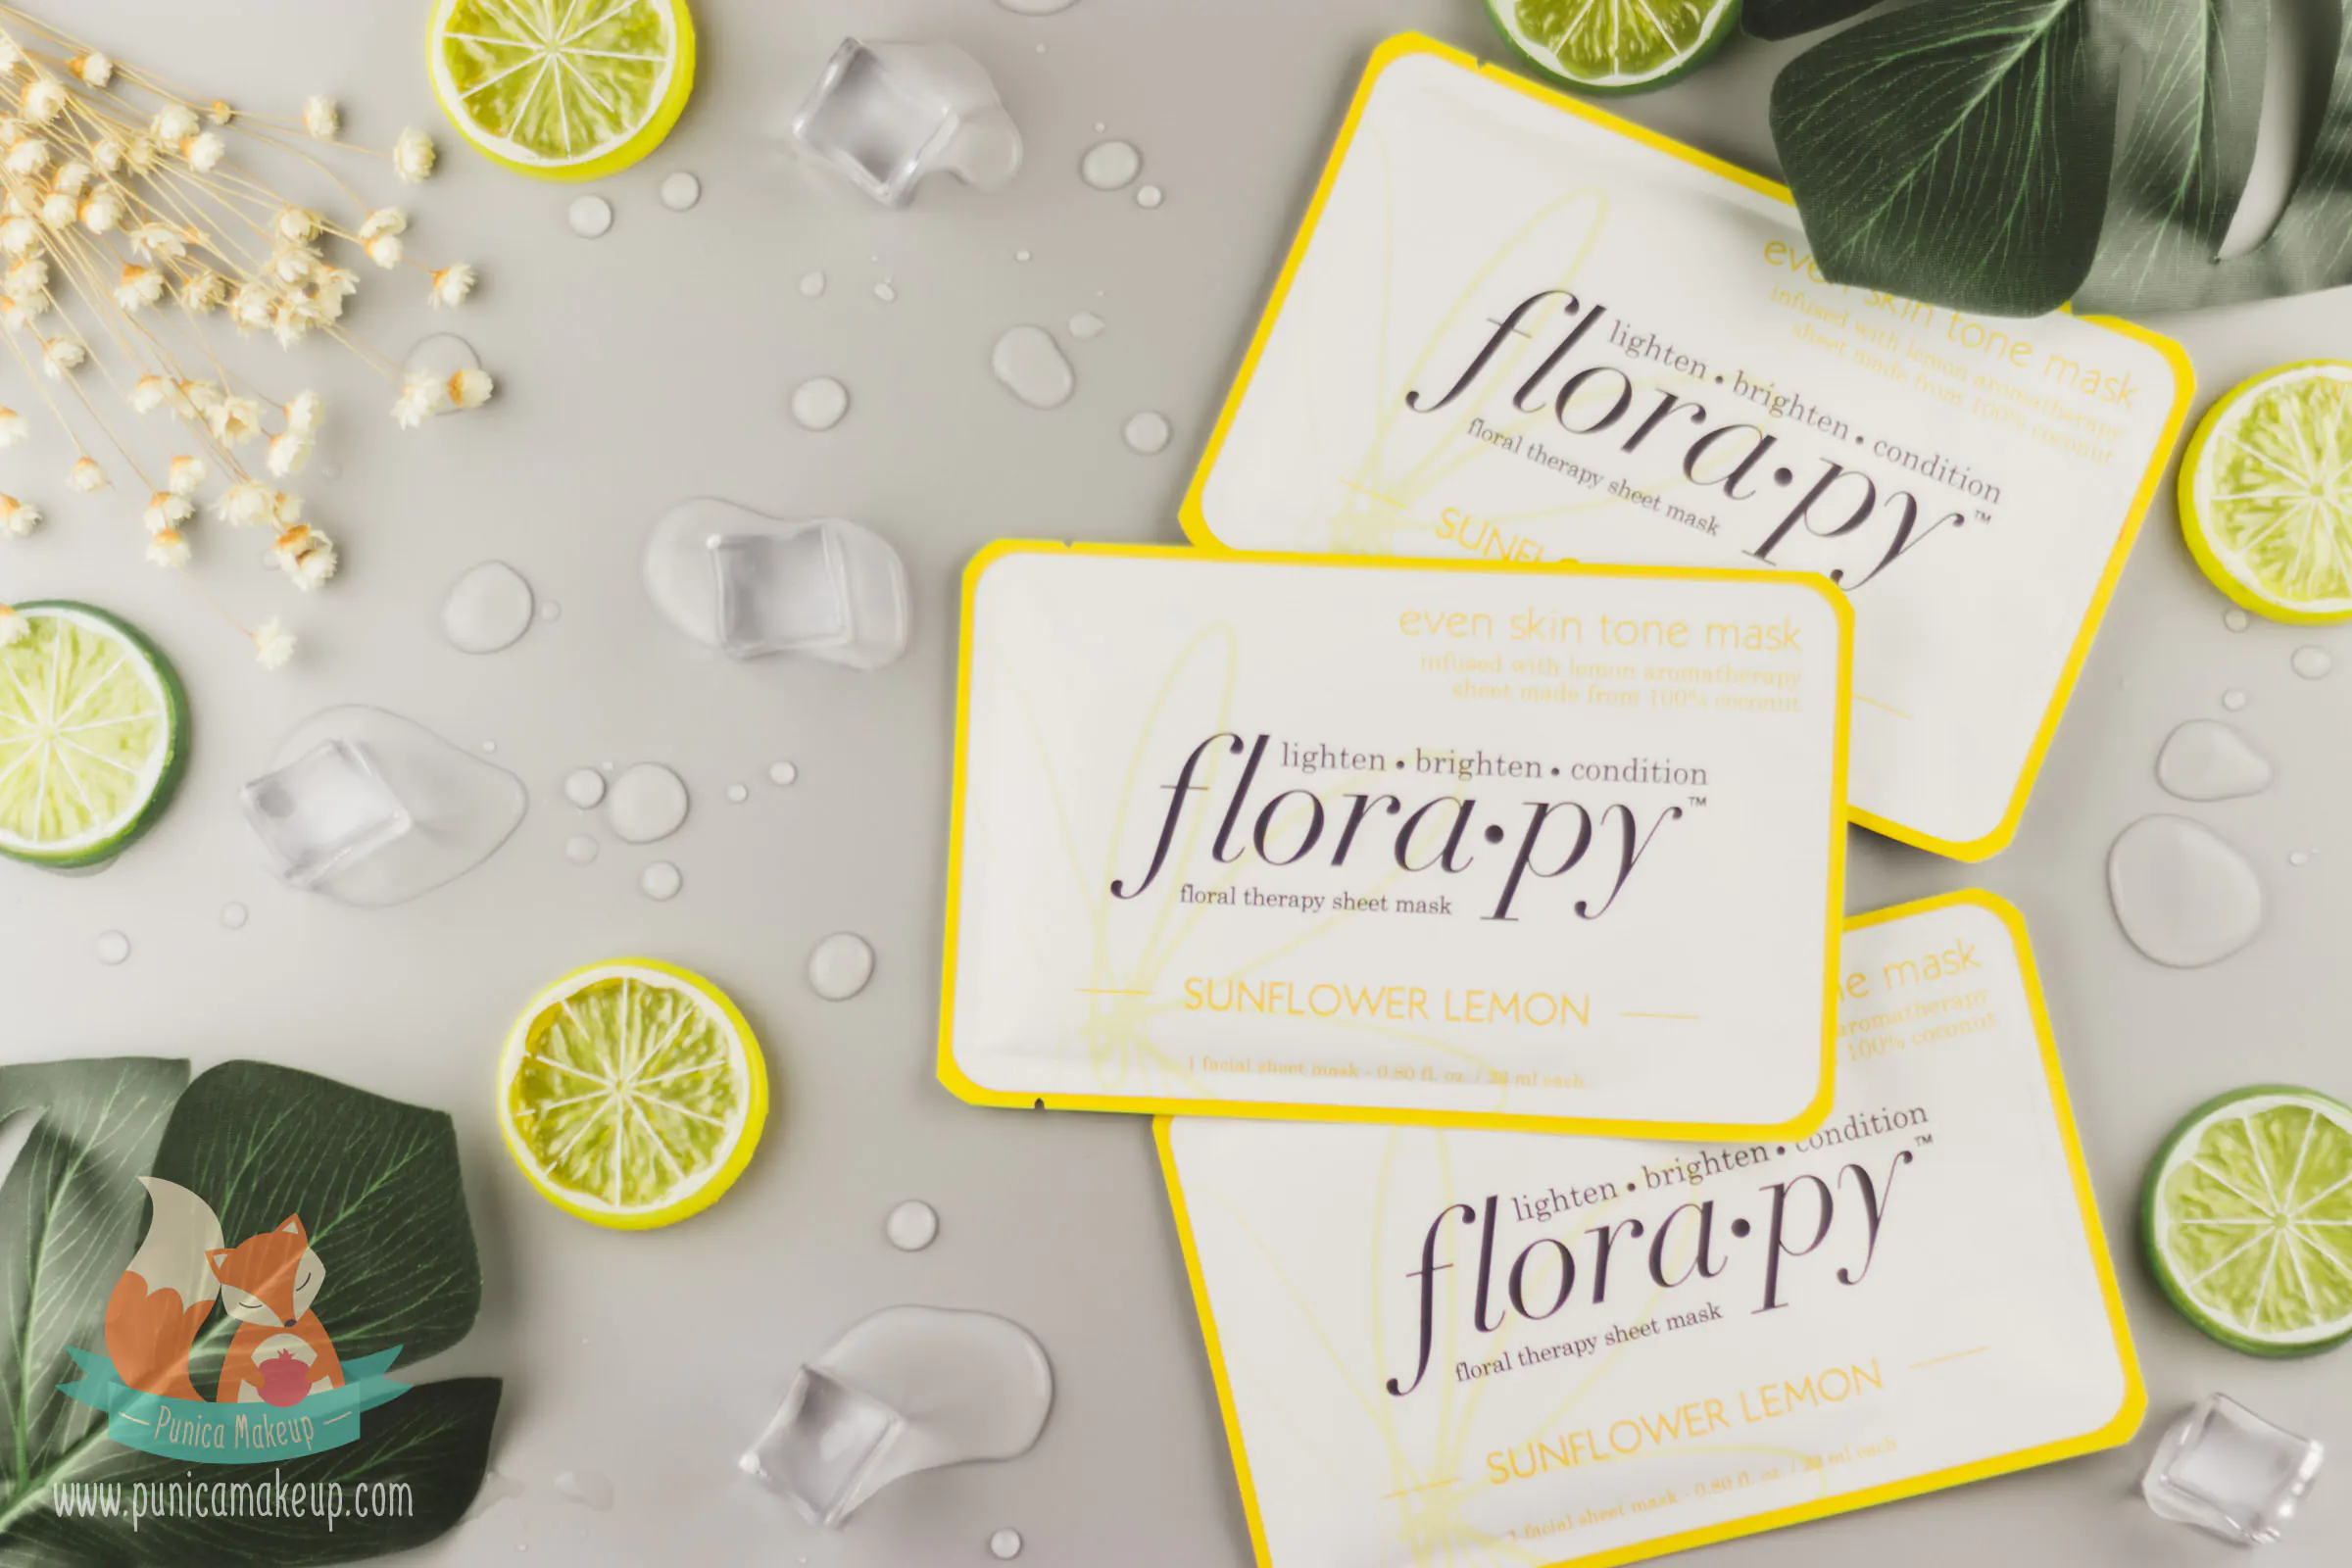 About Florapy Beauty Even Skin Tone Sheet Mask Sunflower Lemon